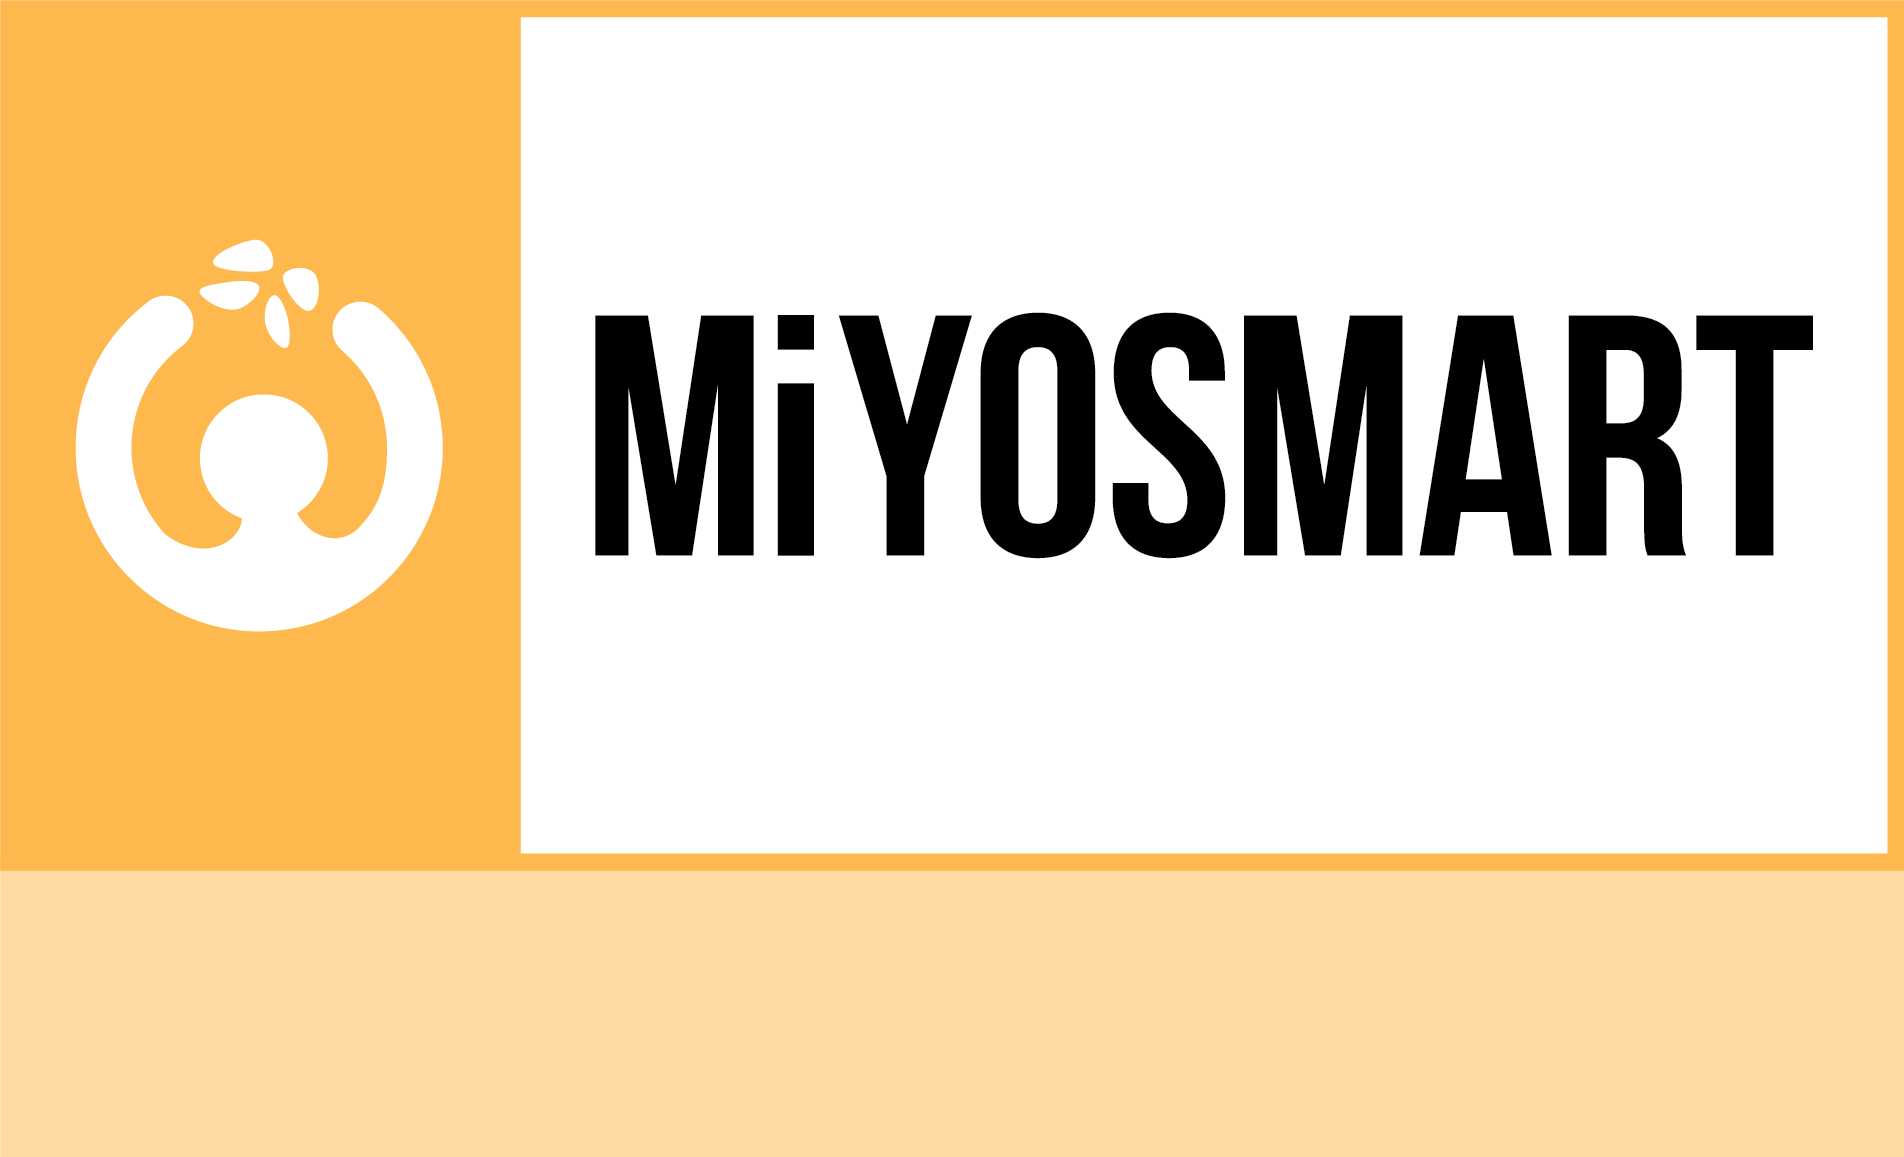 Miyosmart spectacle lenses for myopia management